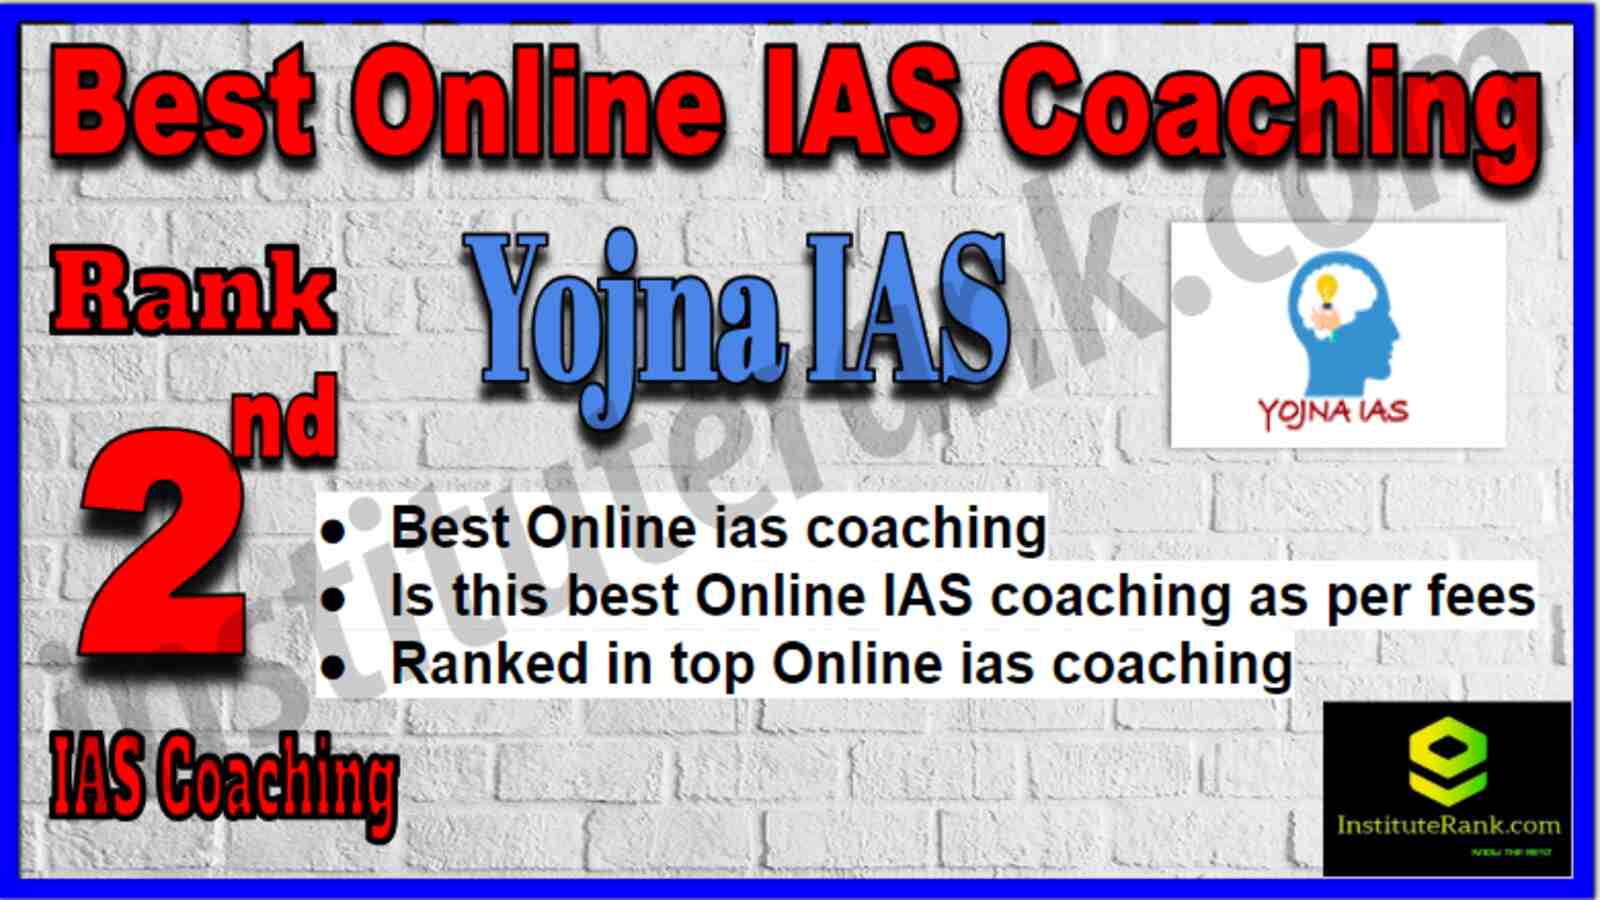 Rank 2 Best Online IAS Coaching